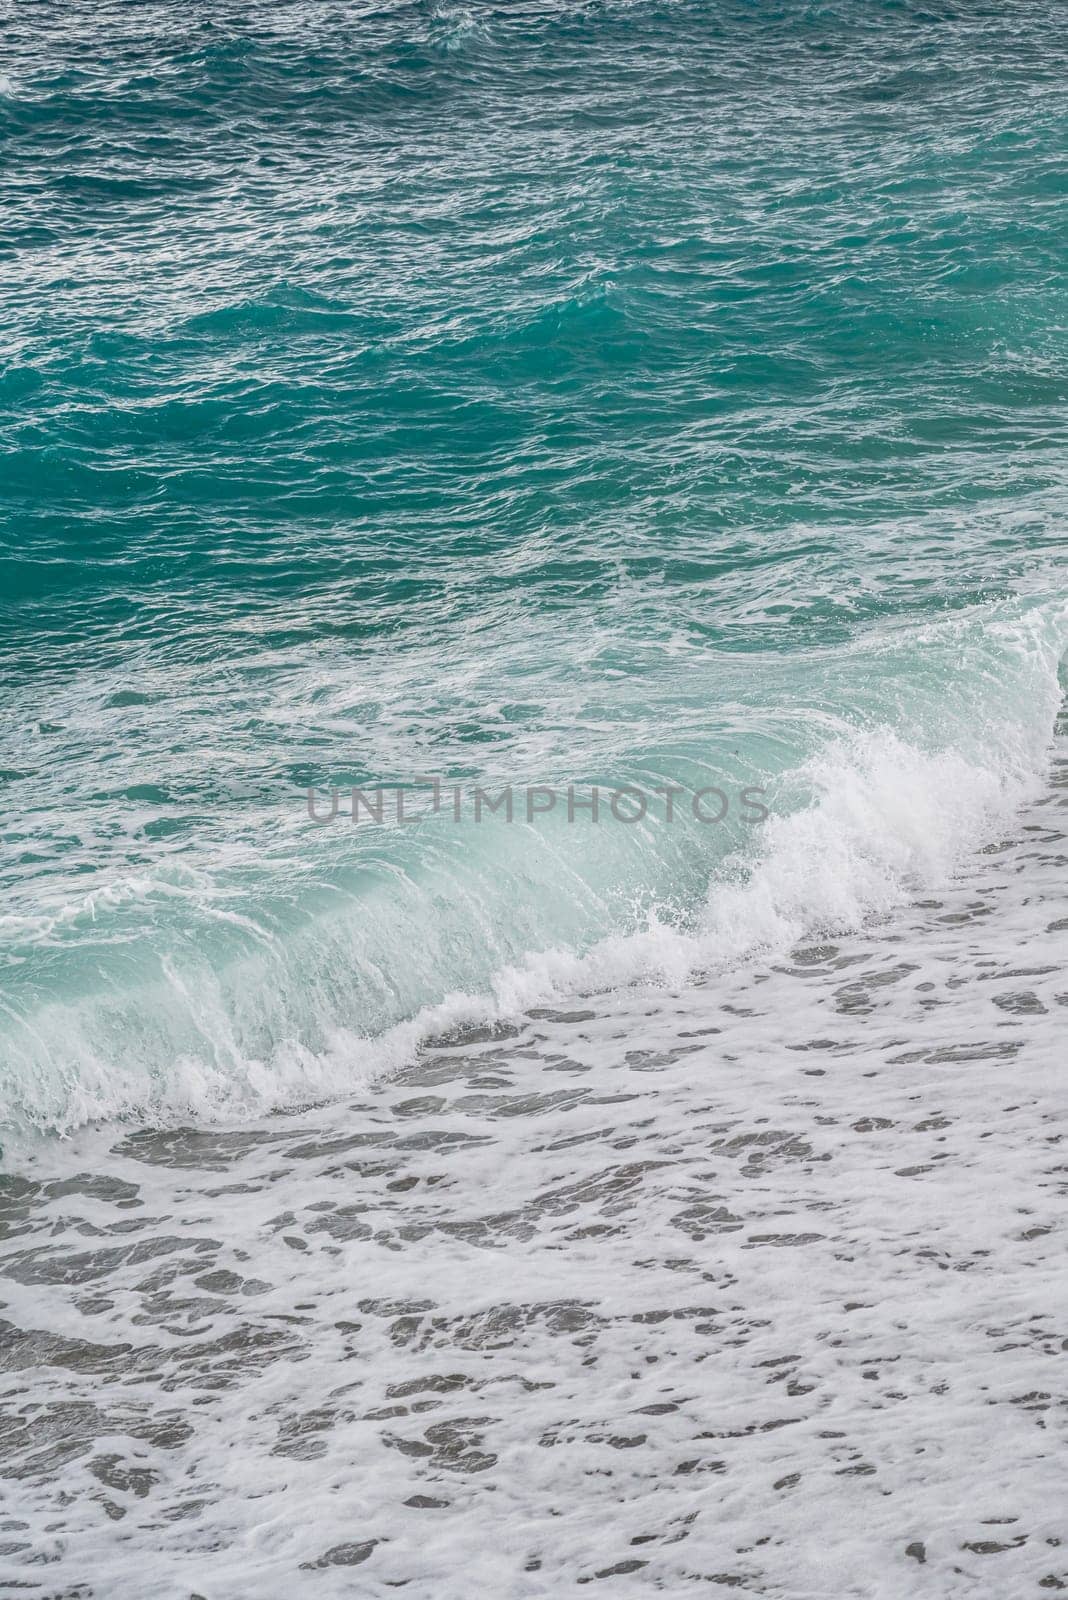 big waves hitting the Konyaalti coast on a stormy day by Sonat